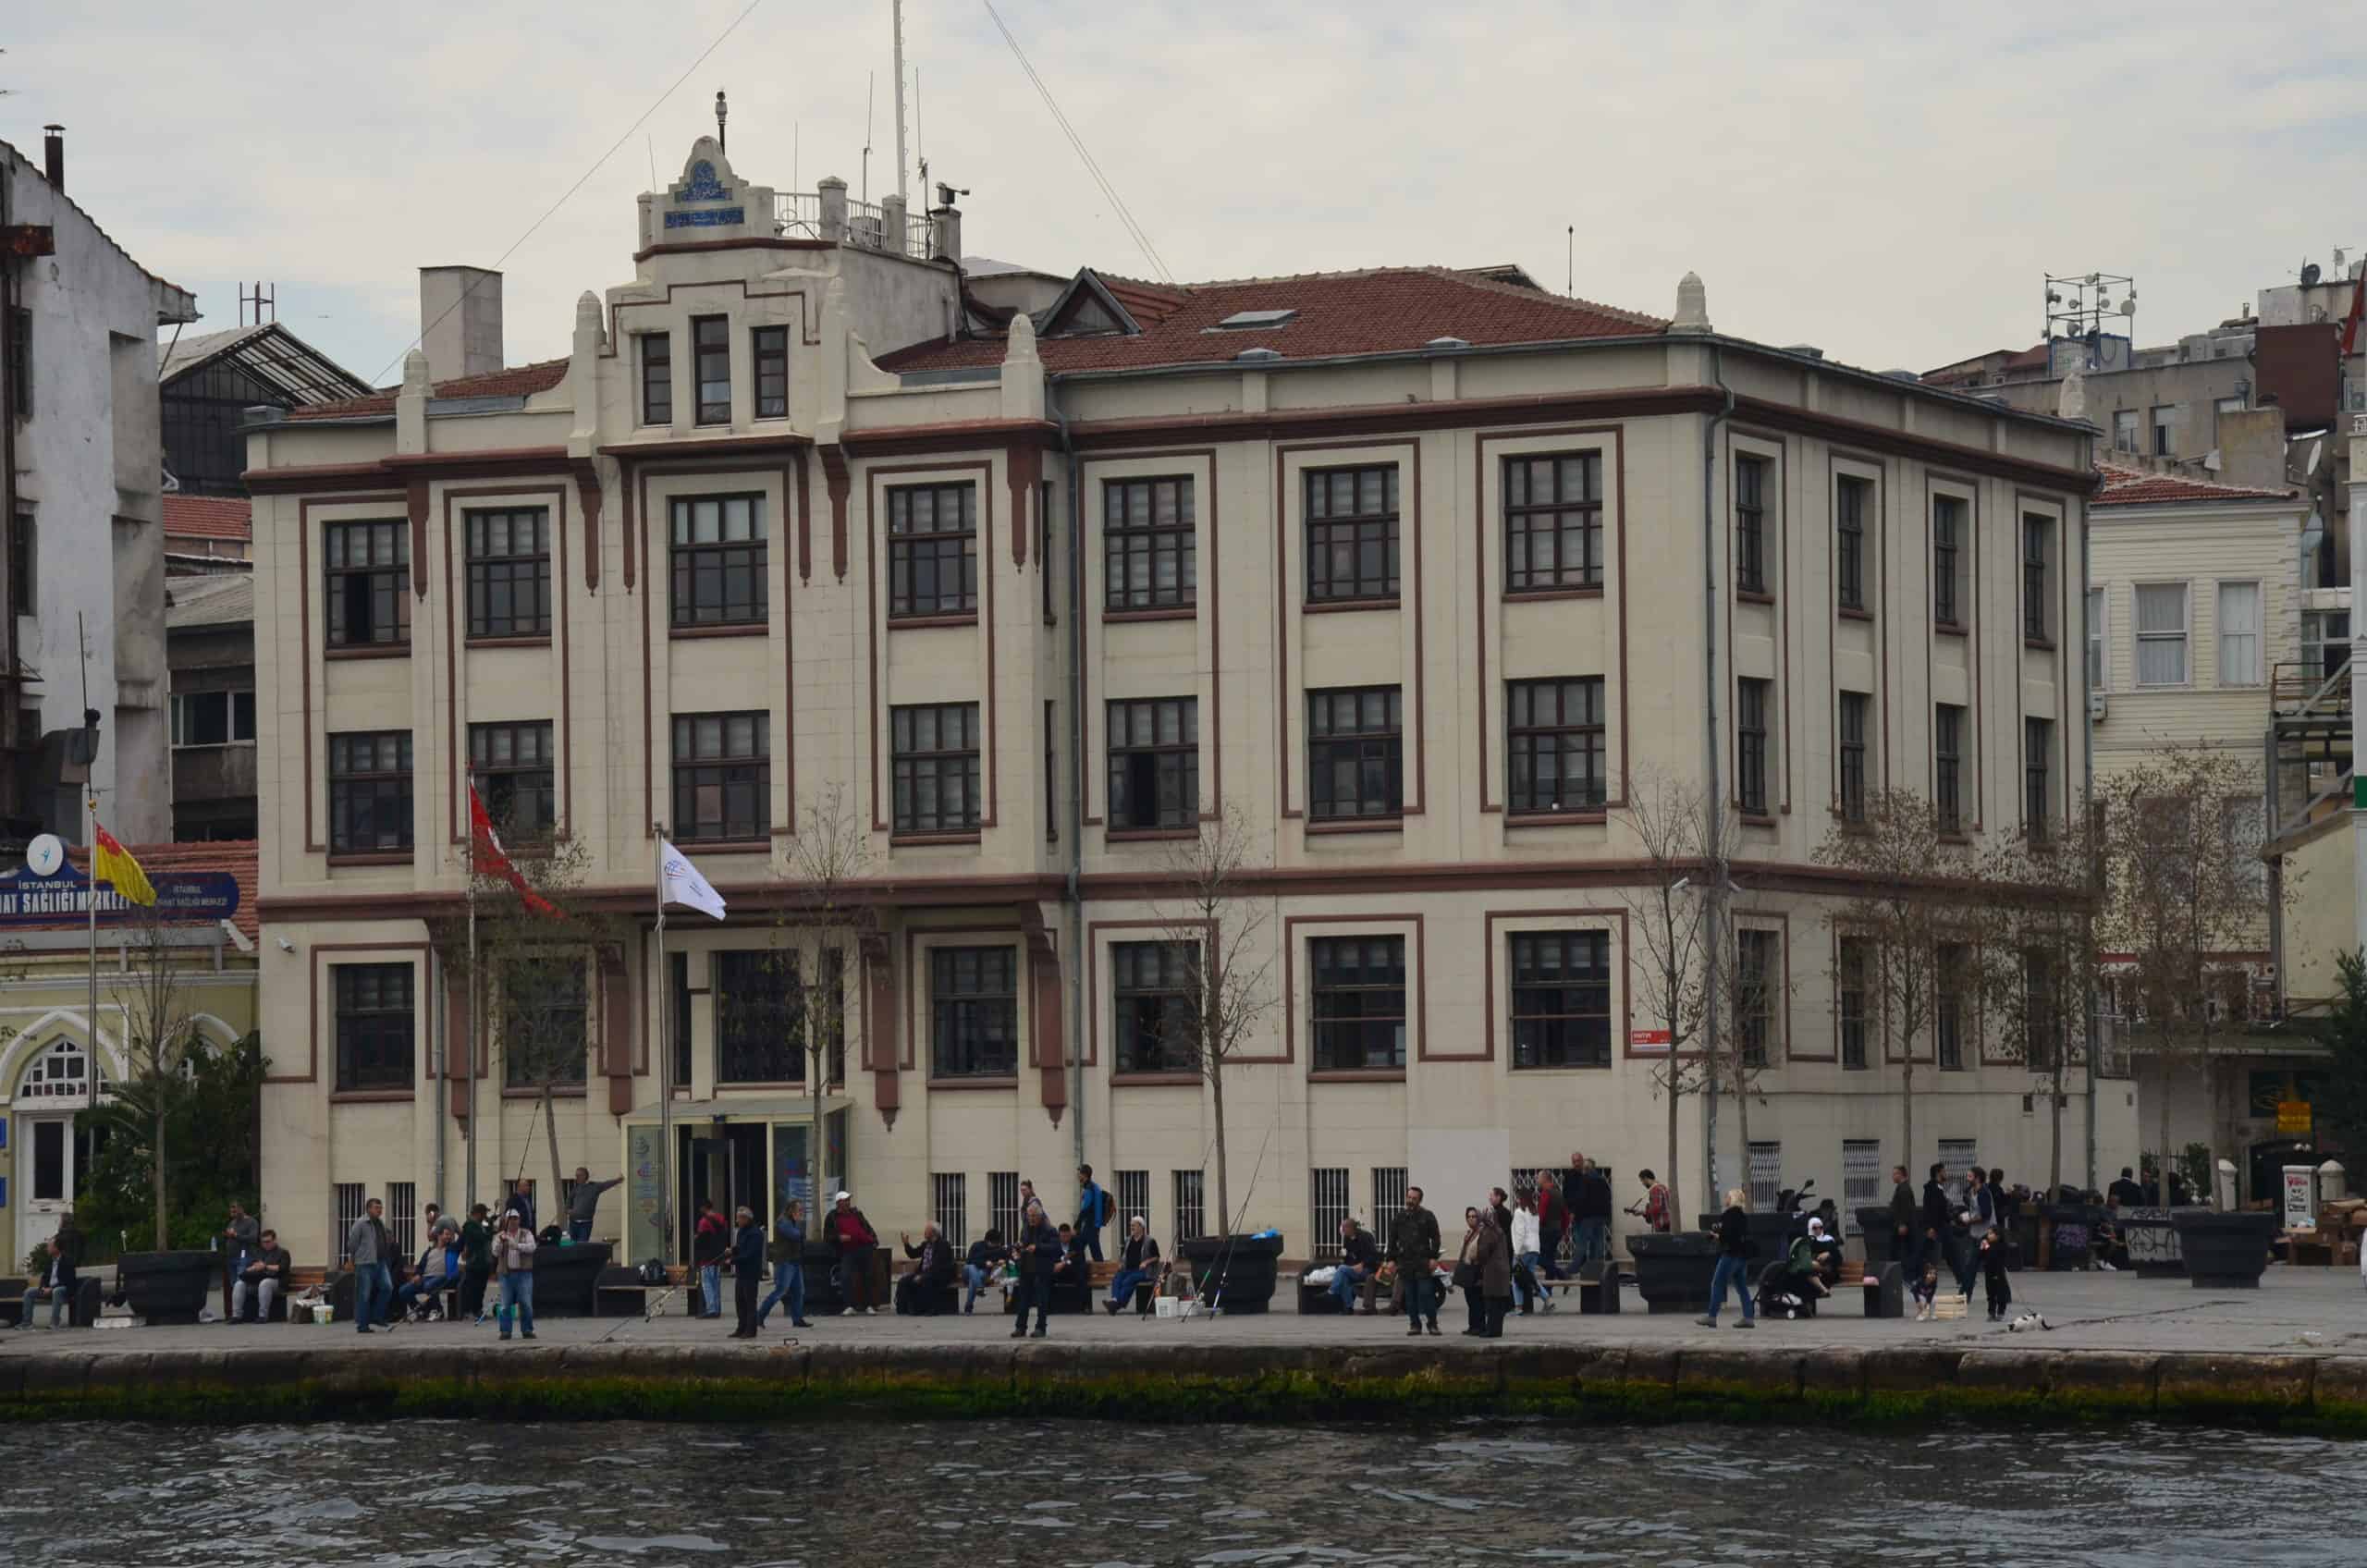 Istanbul Port Authority in Karaköy, Istanbul, Turkey